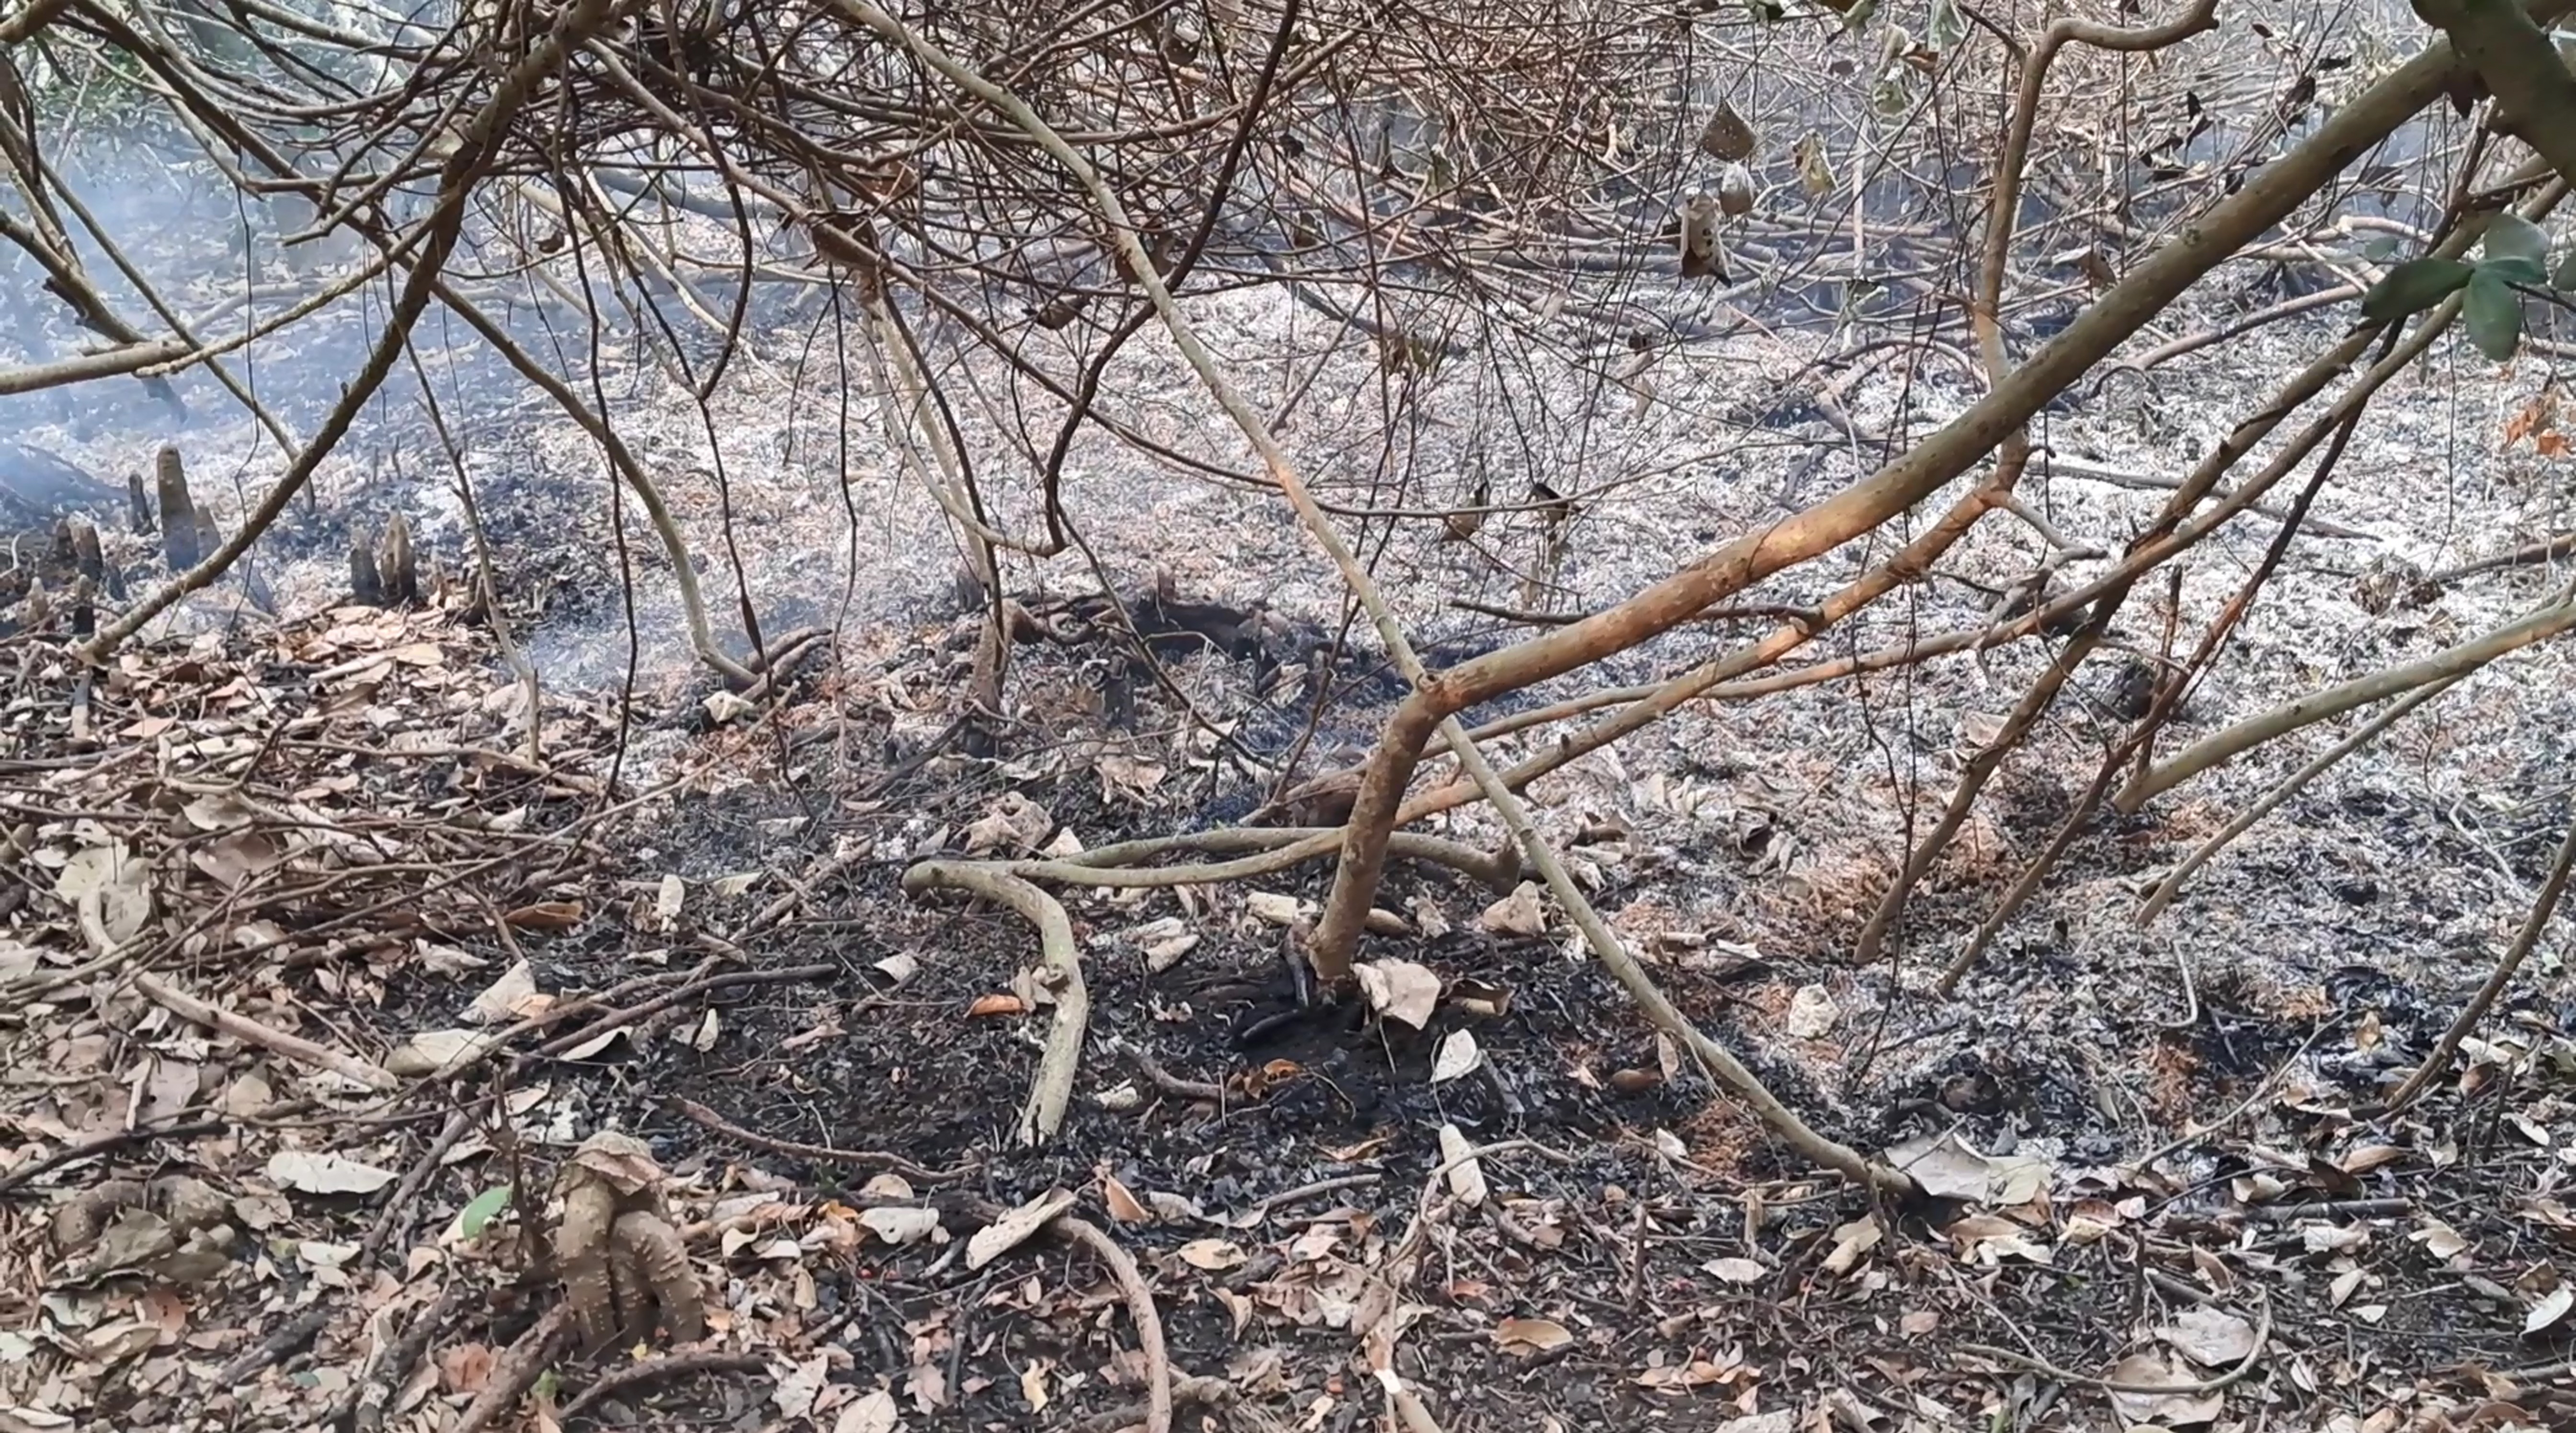 Probe committee formed over Sundarbans fire